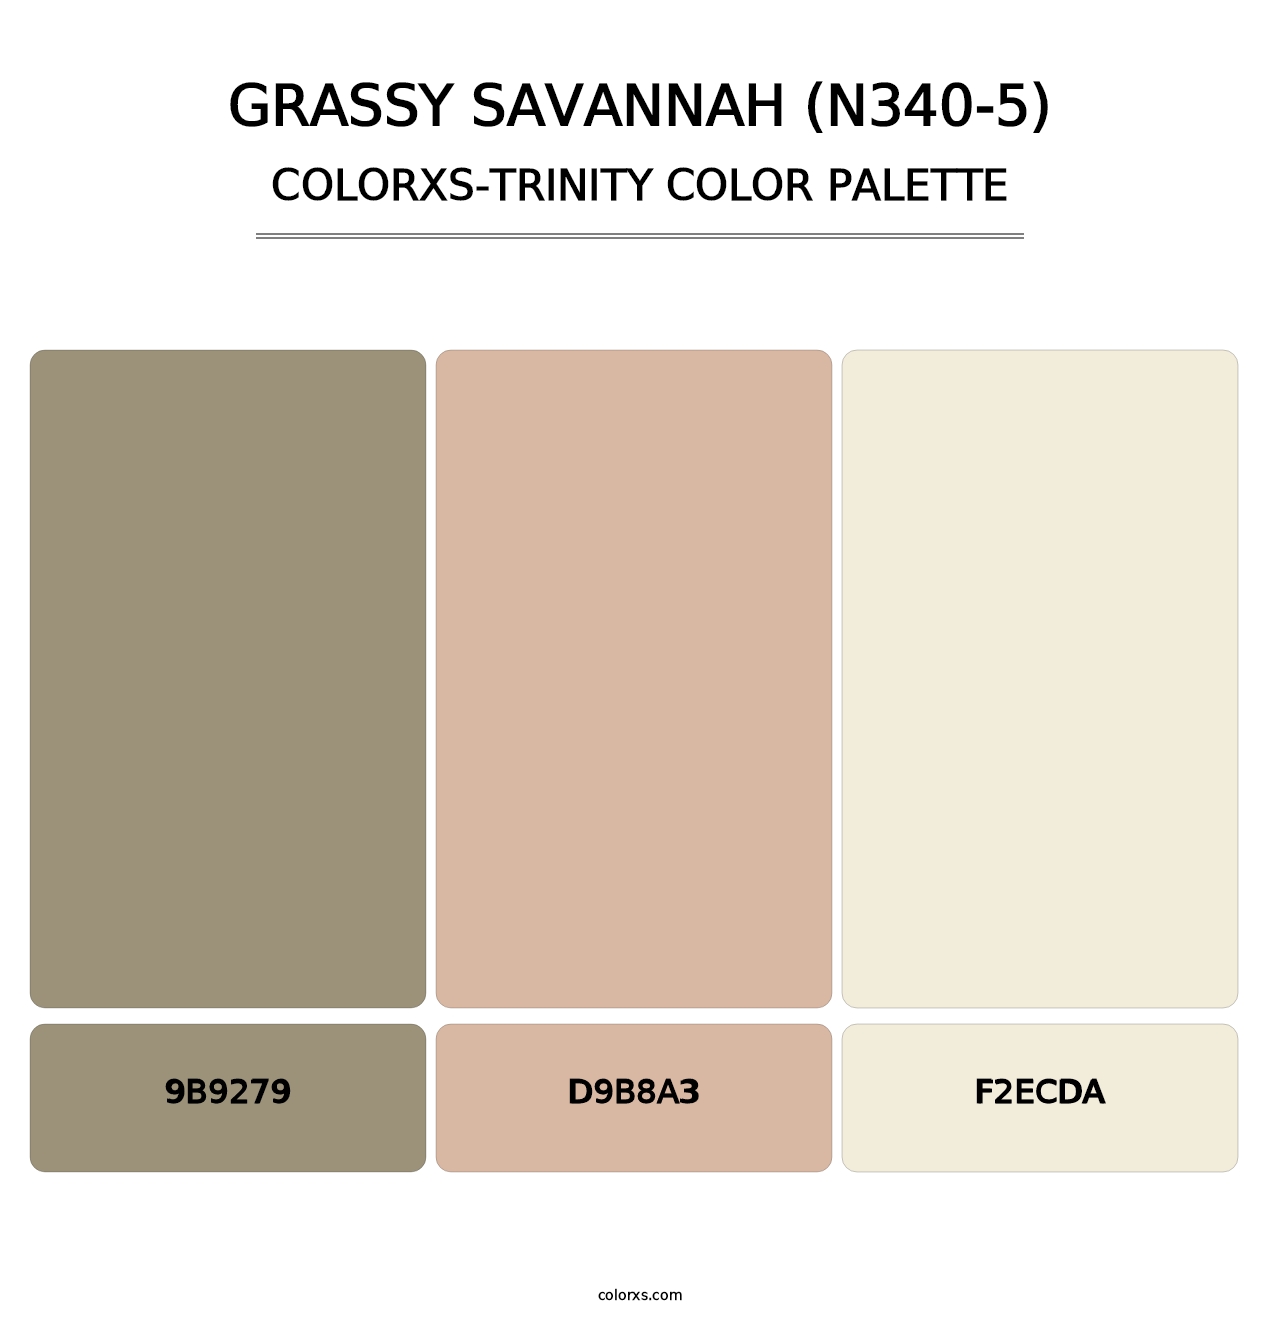 Grassy Savannah (N340-5) - Colorxs Trinity Palette